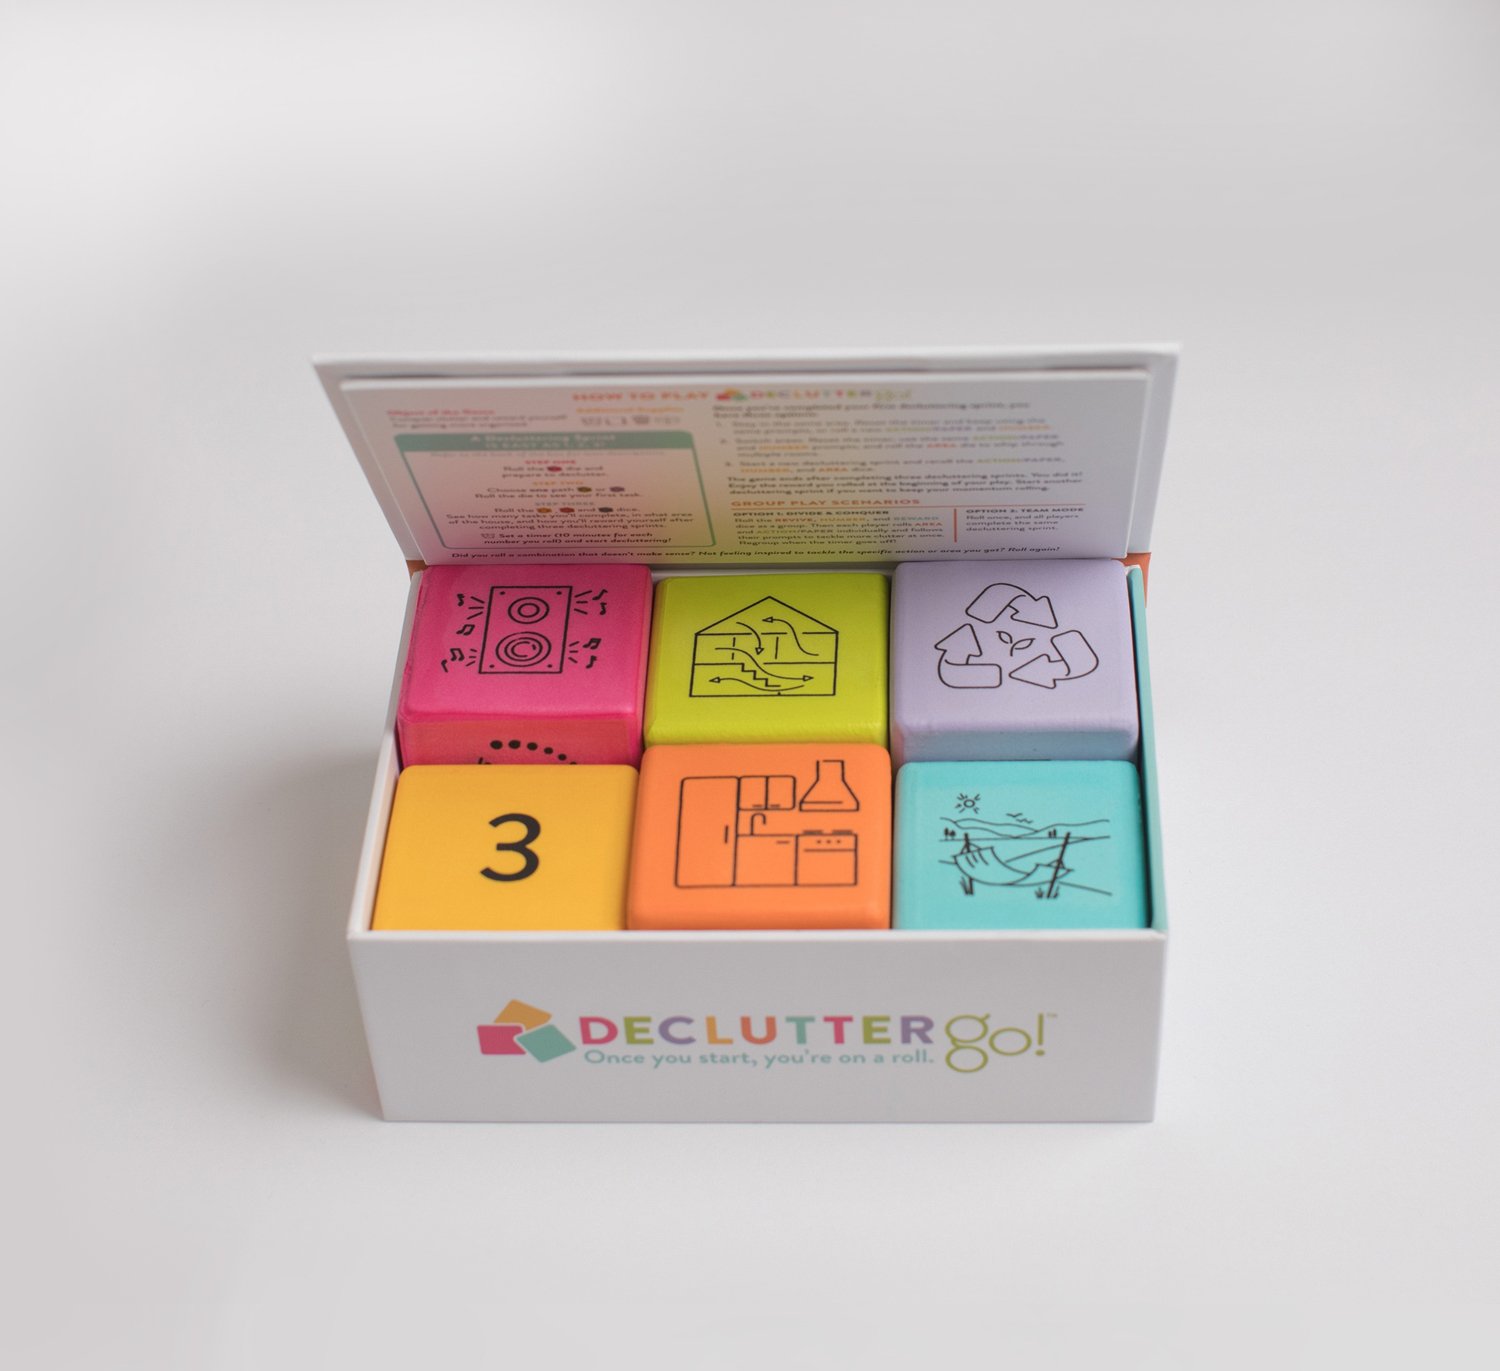 Declutter Go! Box & Dice.jpg